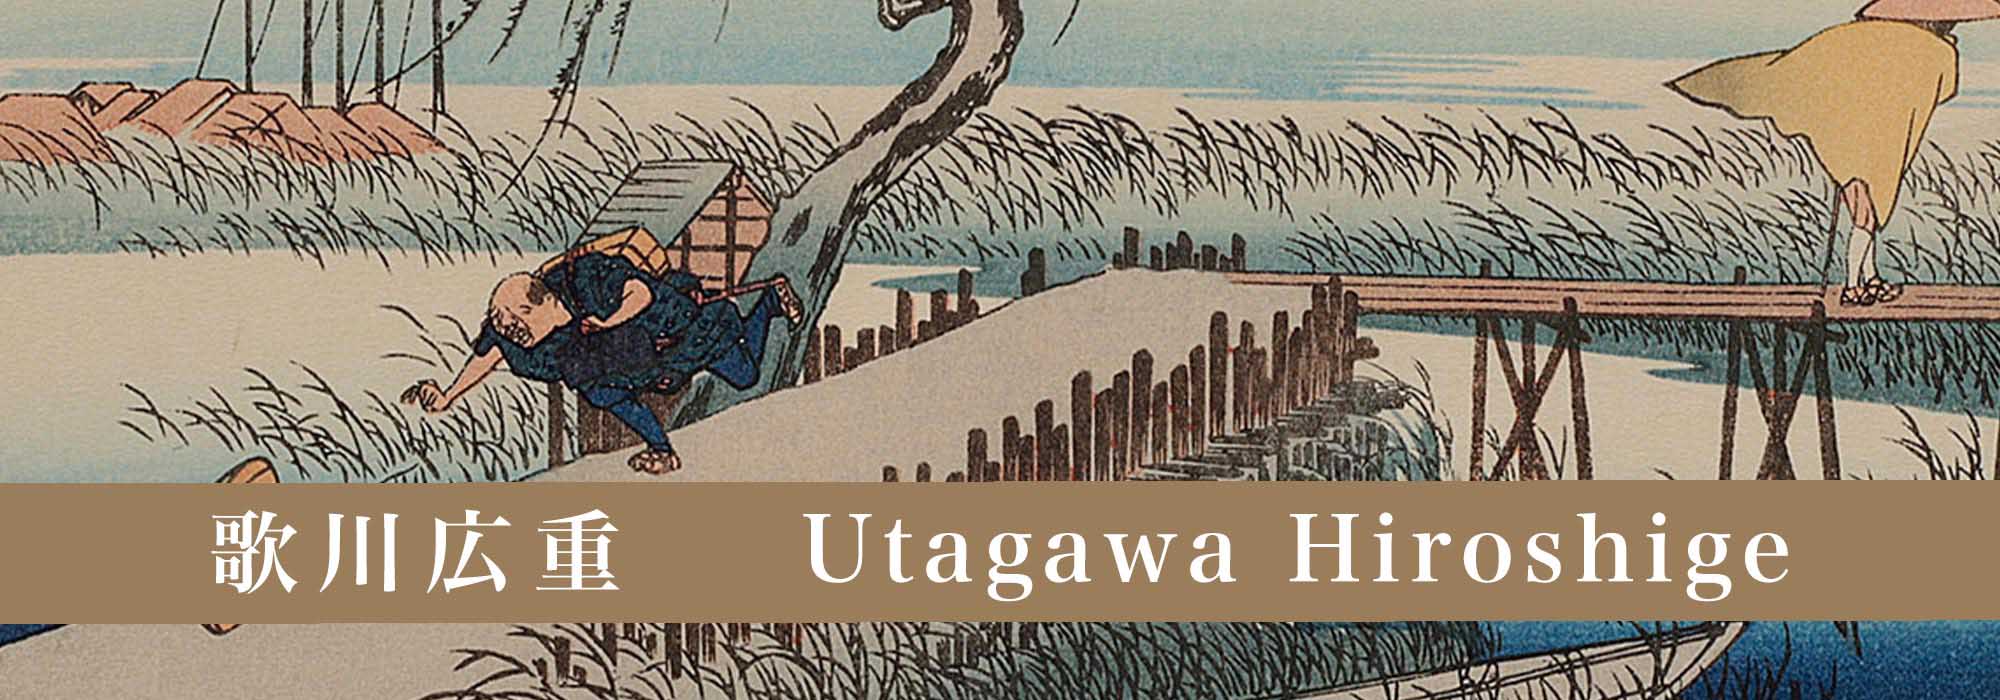 Utagawa Hiroshige Reproduction